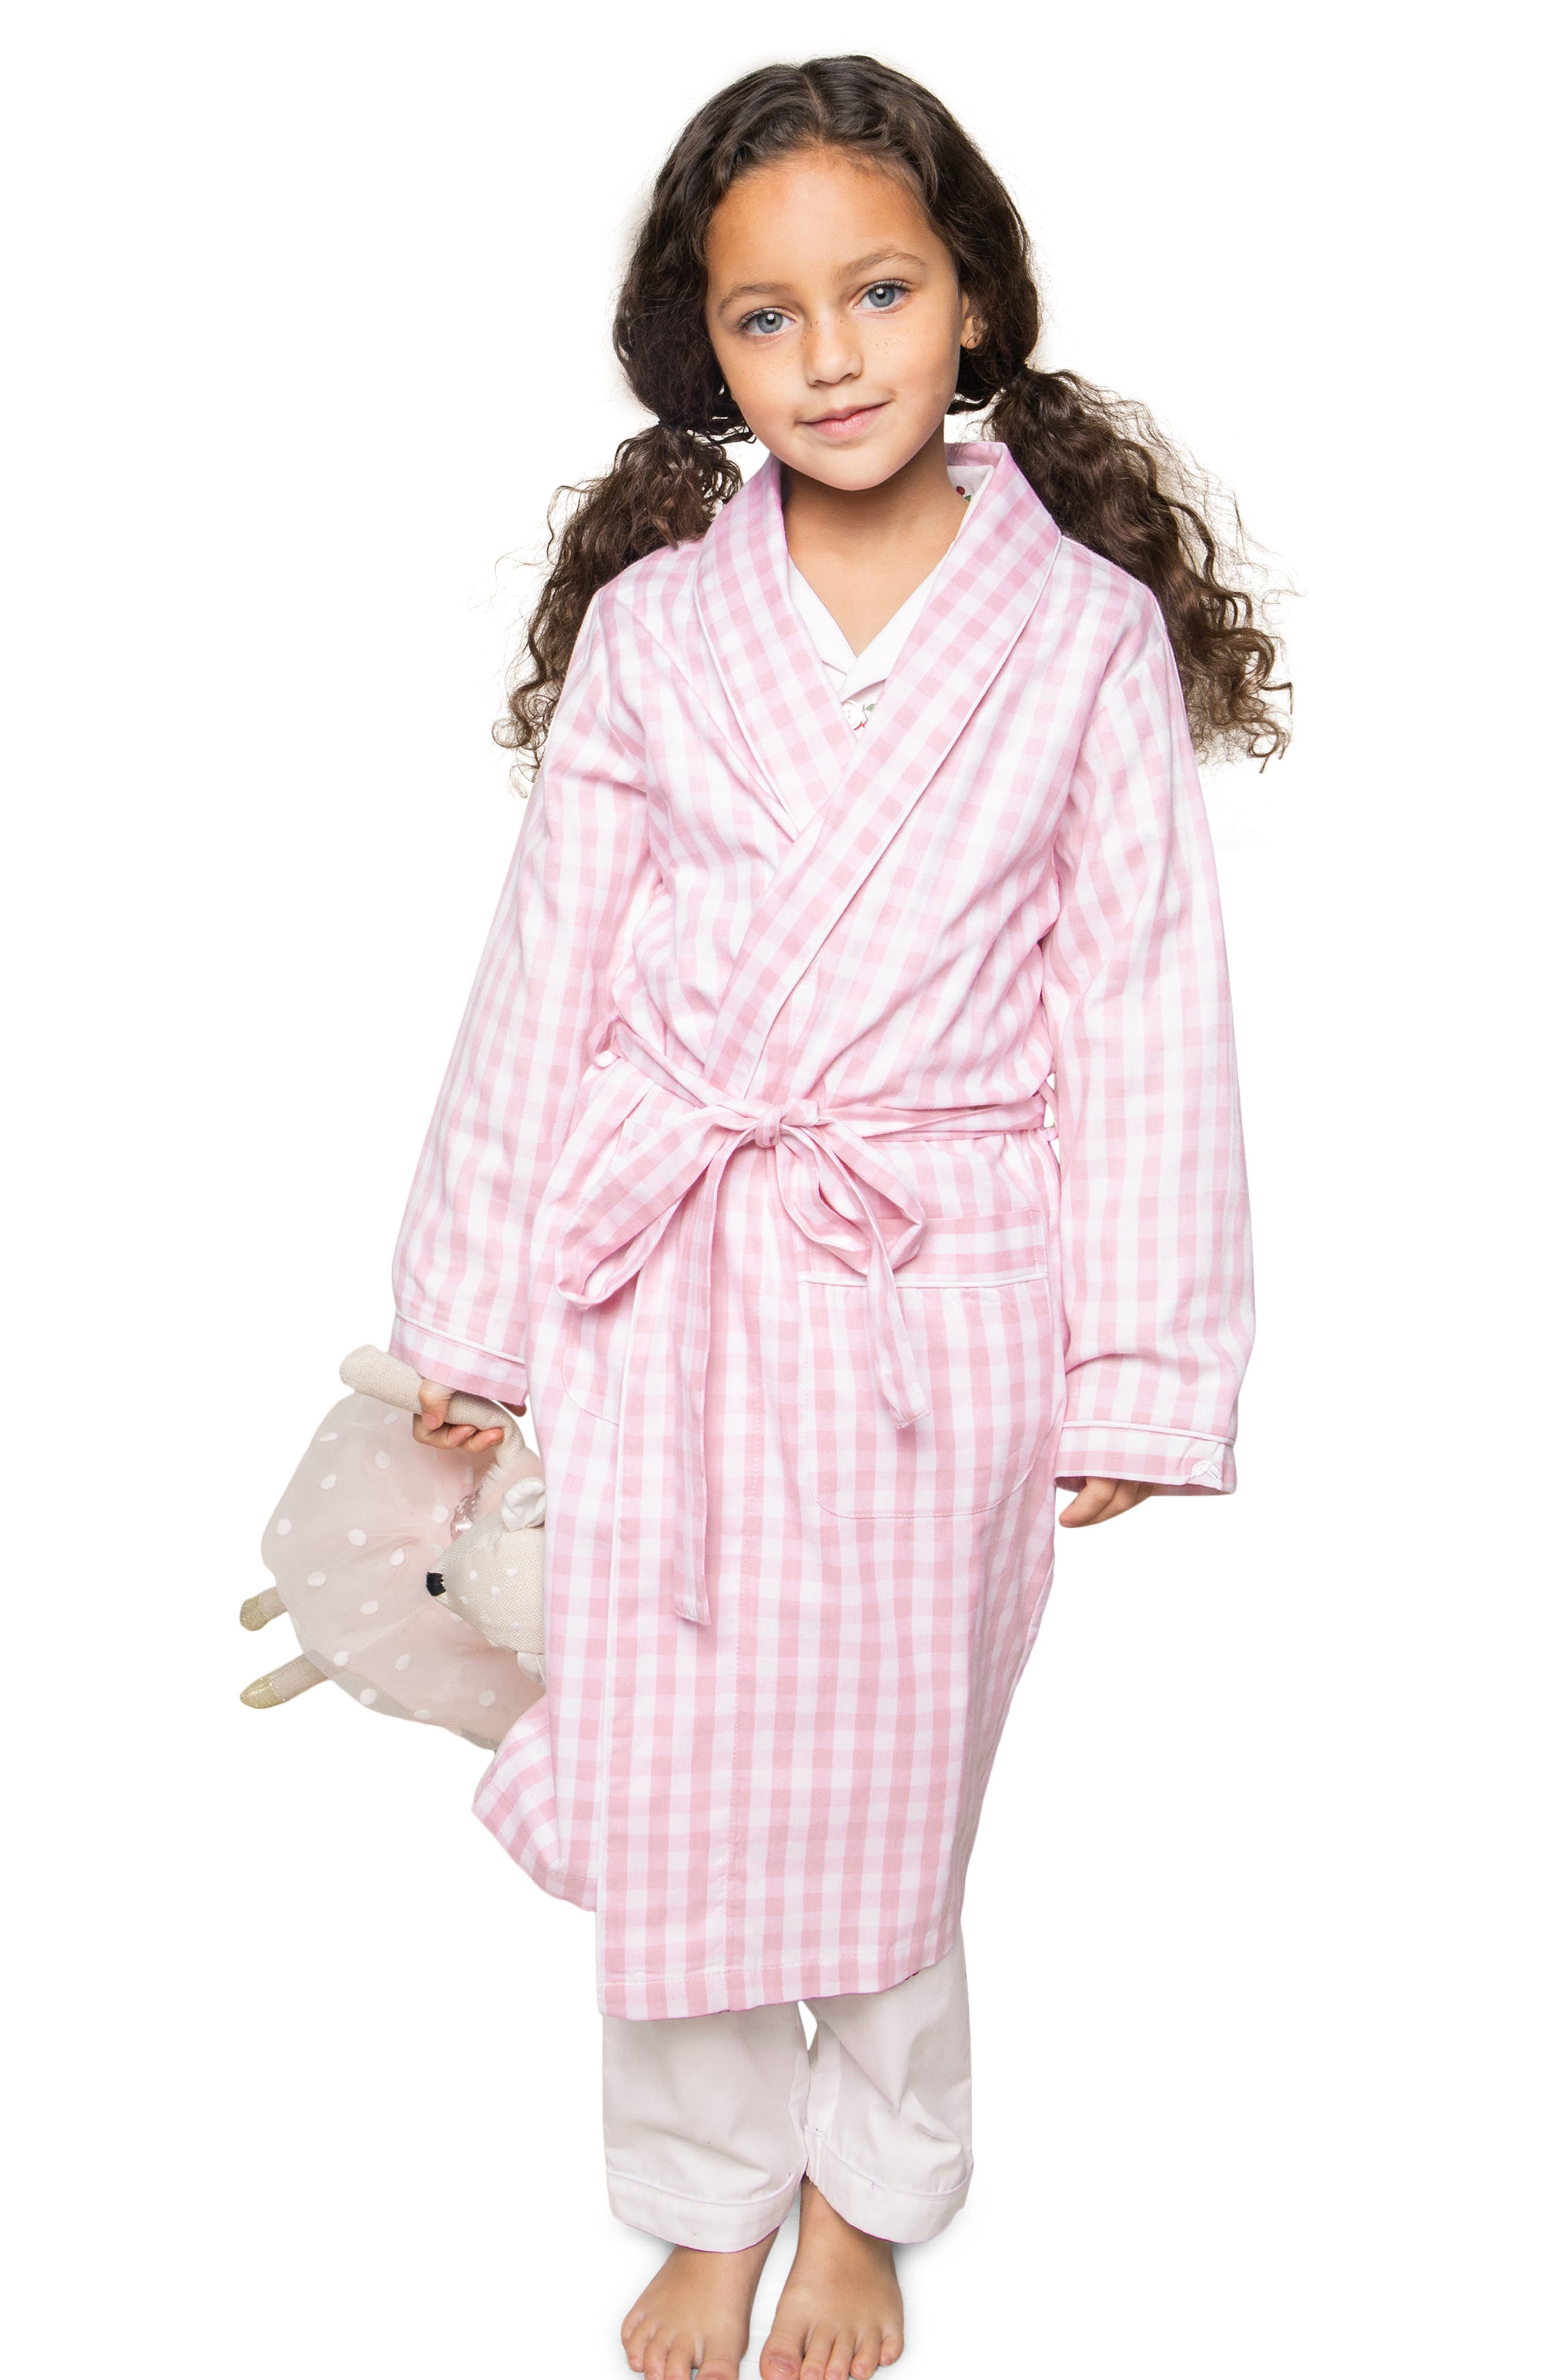 Baby Kids Children's Robe Dressing Gown Bathrobe Hooded Bath Robe Sleepwear 